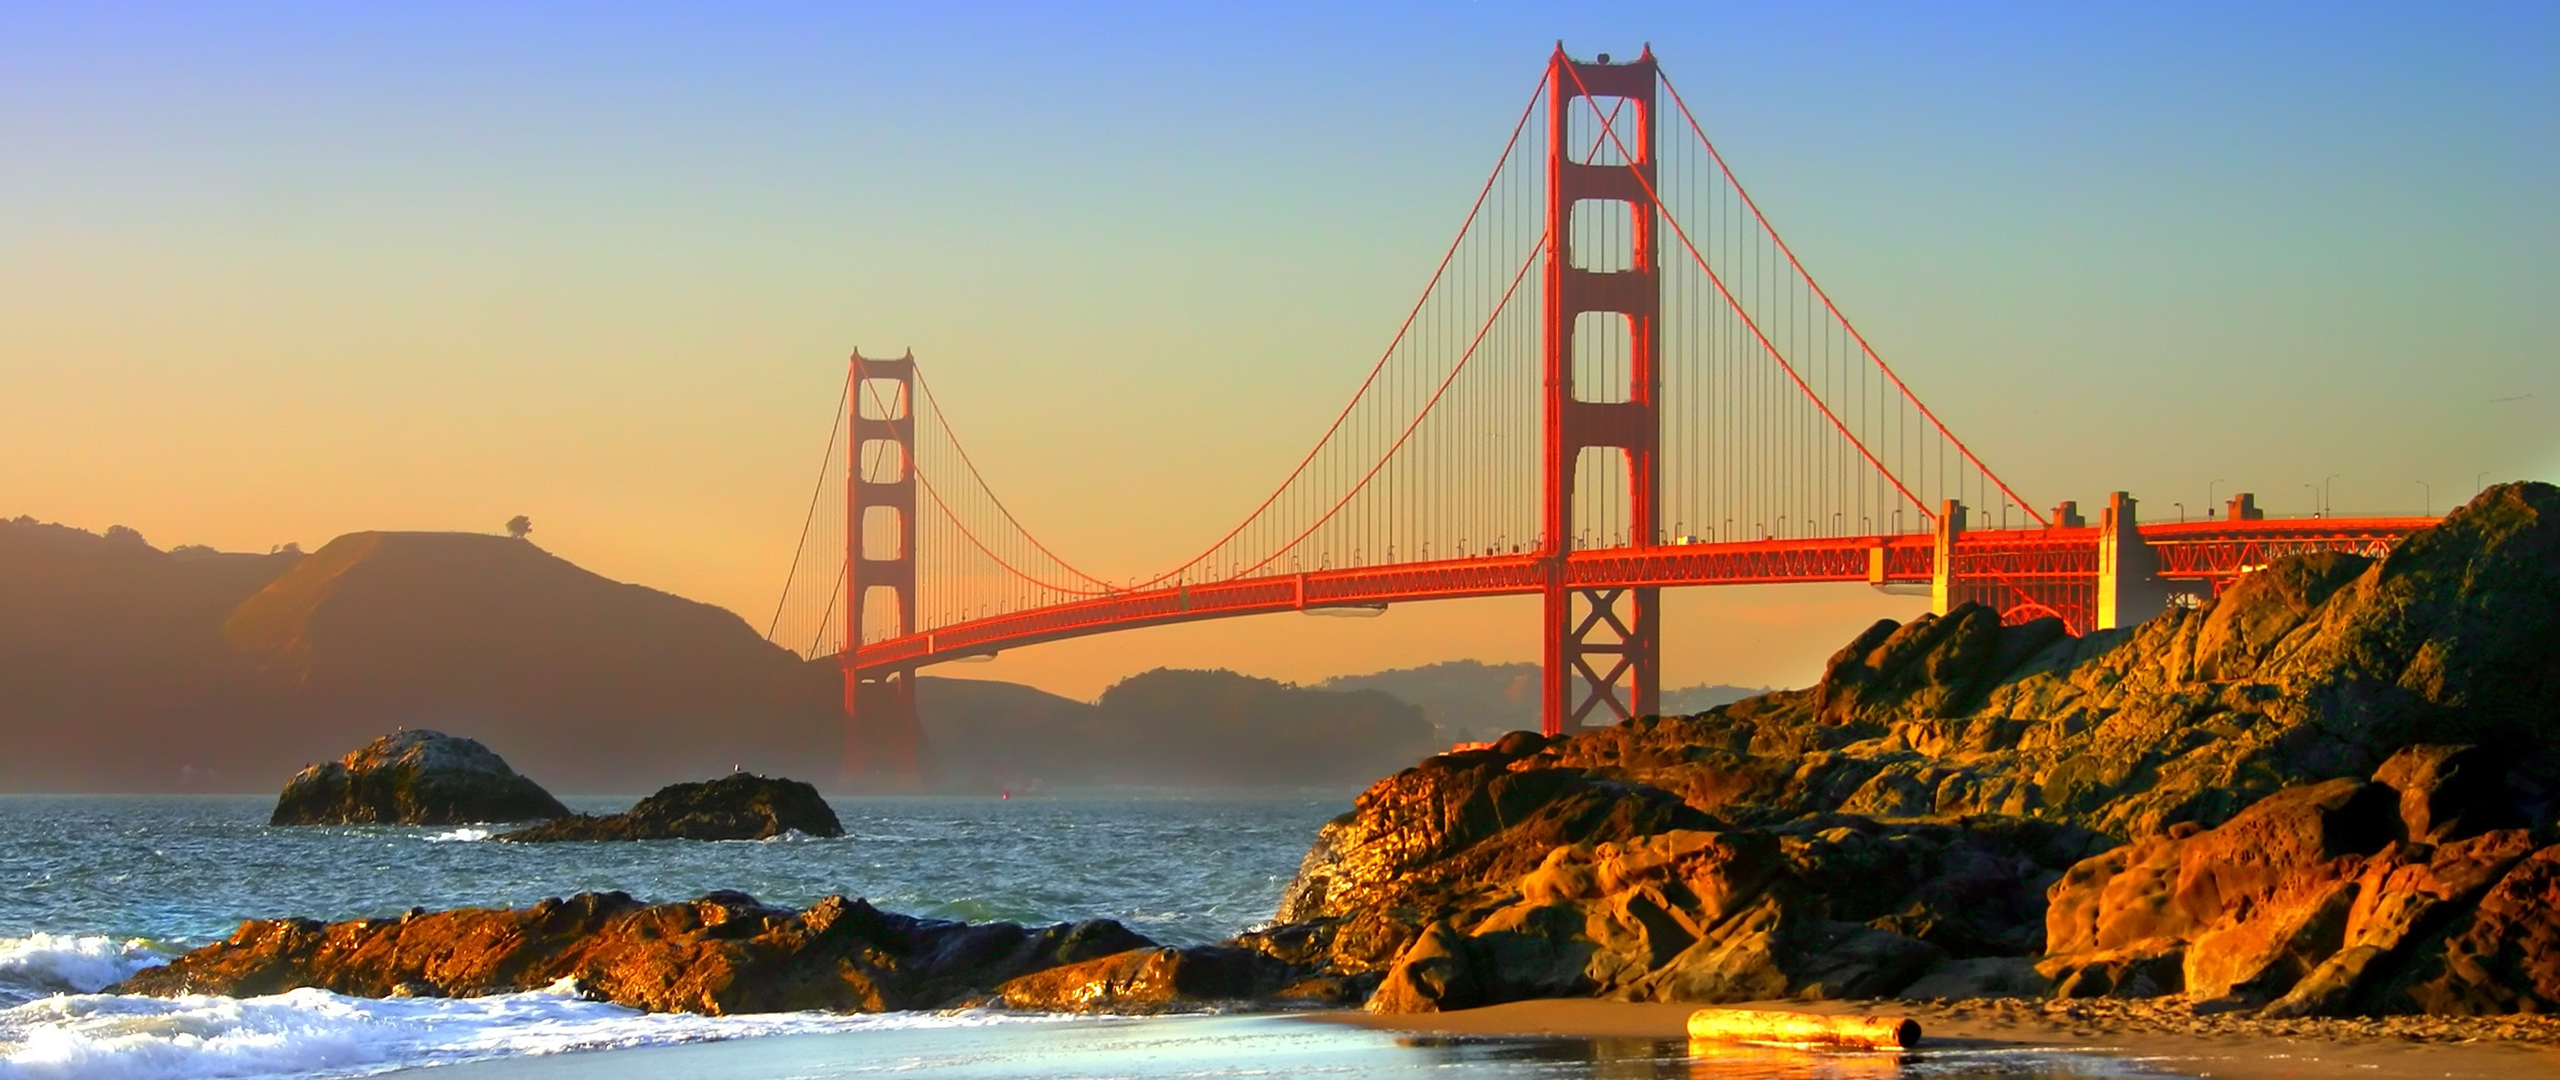 General 2560x1080 Golden Gate Bridge San Francisco USA bridge suspension bridge